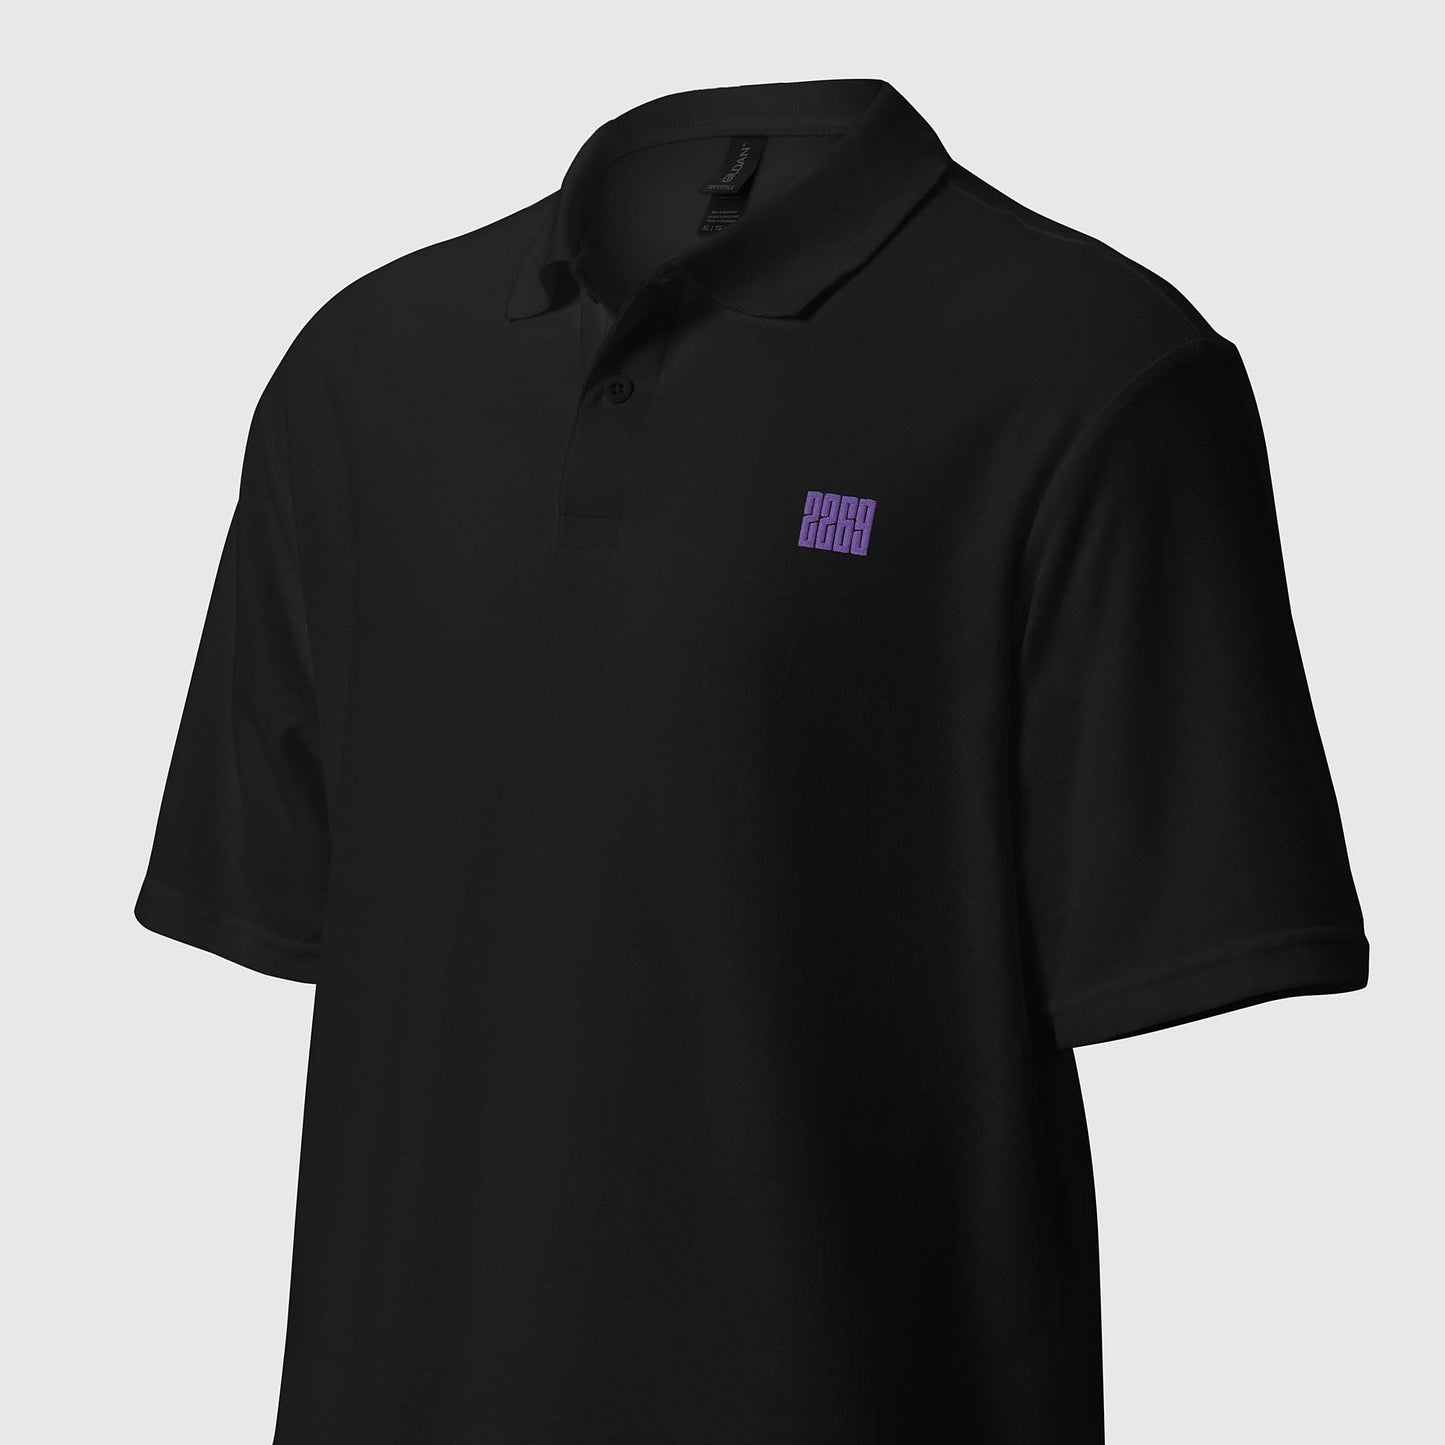 Men's black pique polo shirt with embroidered 2269 logo